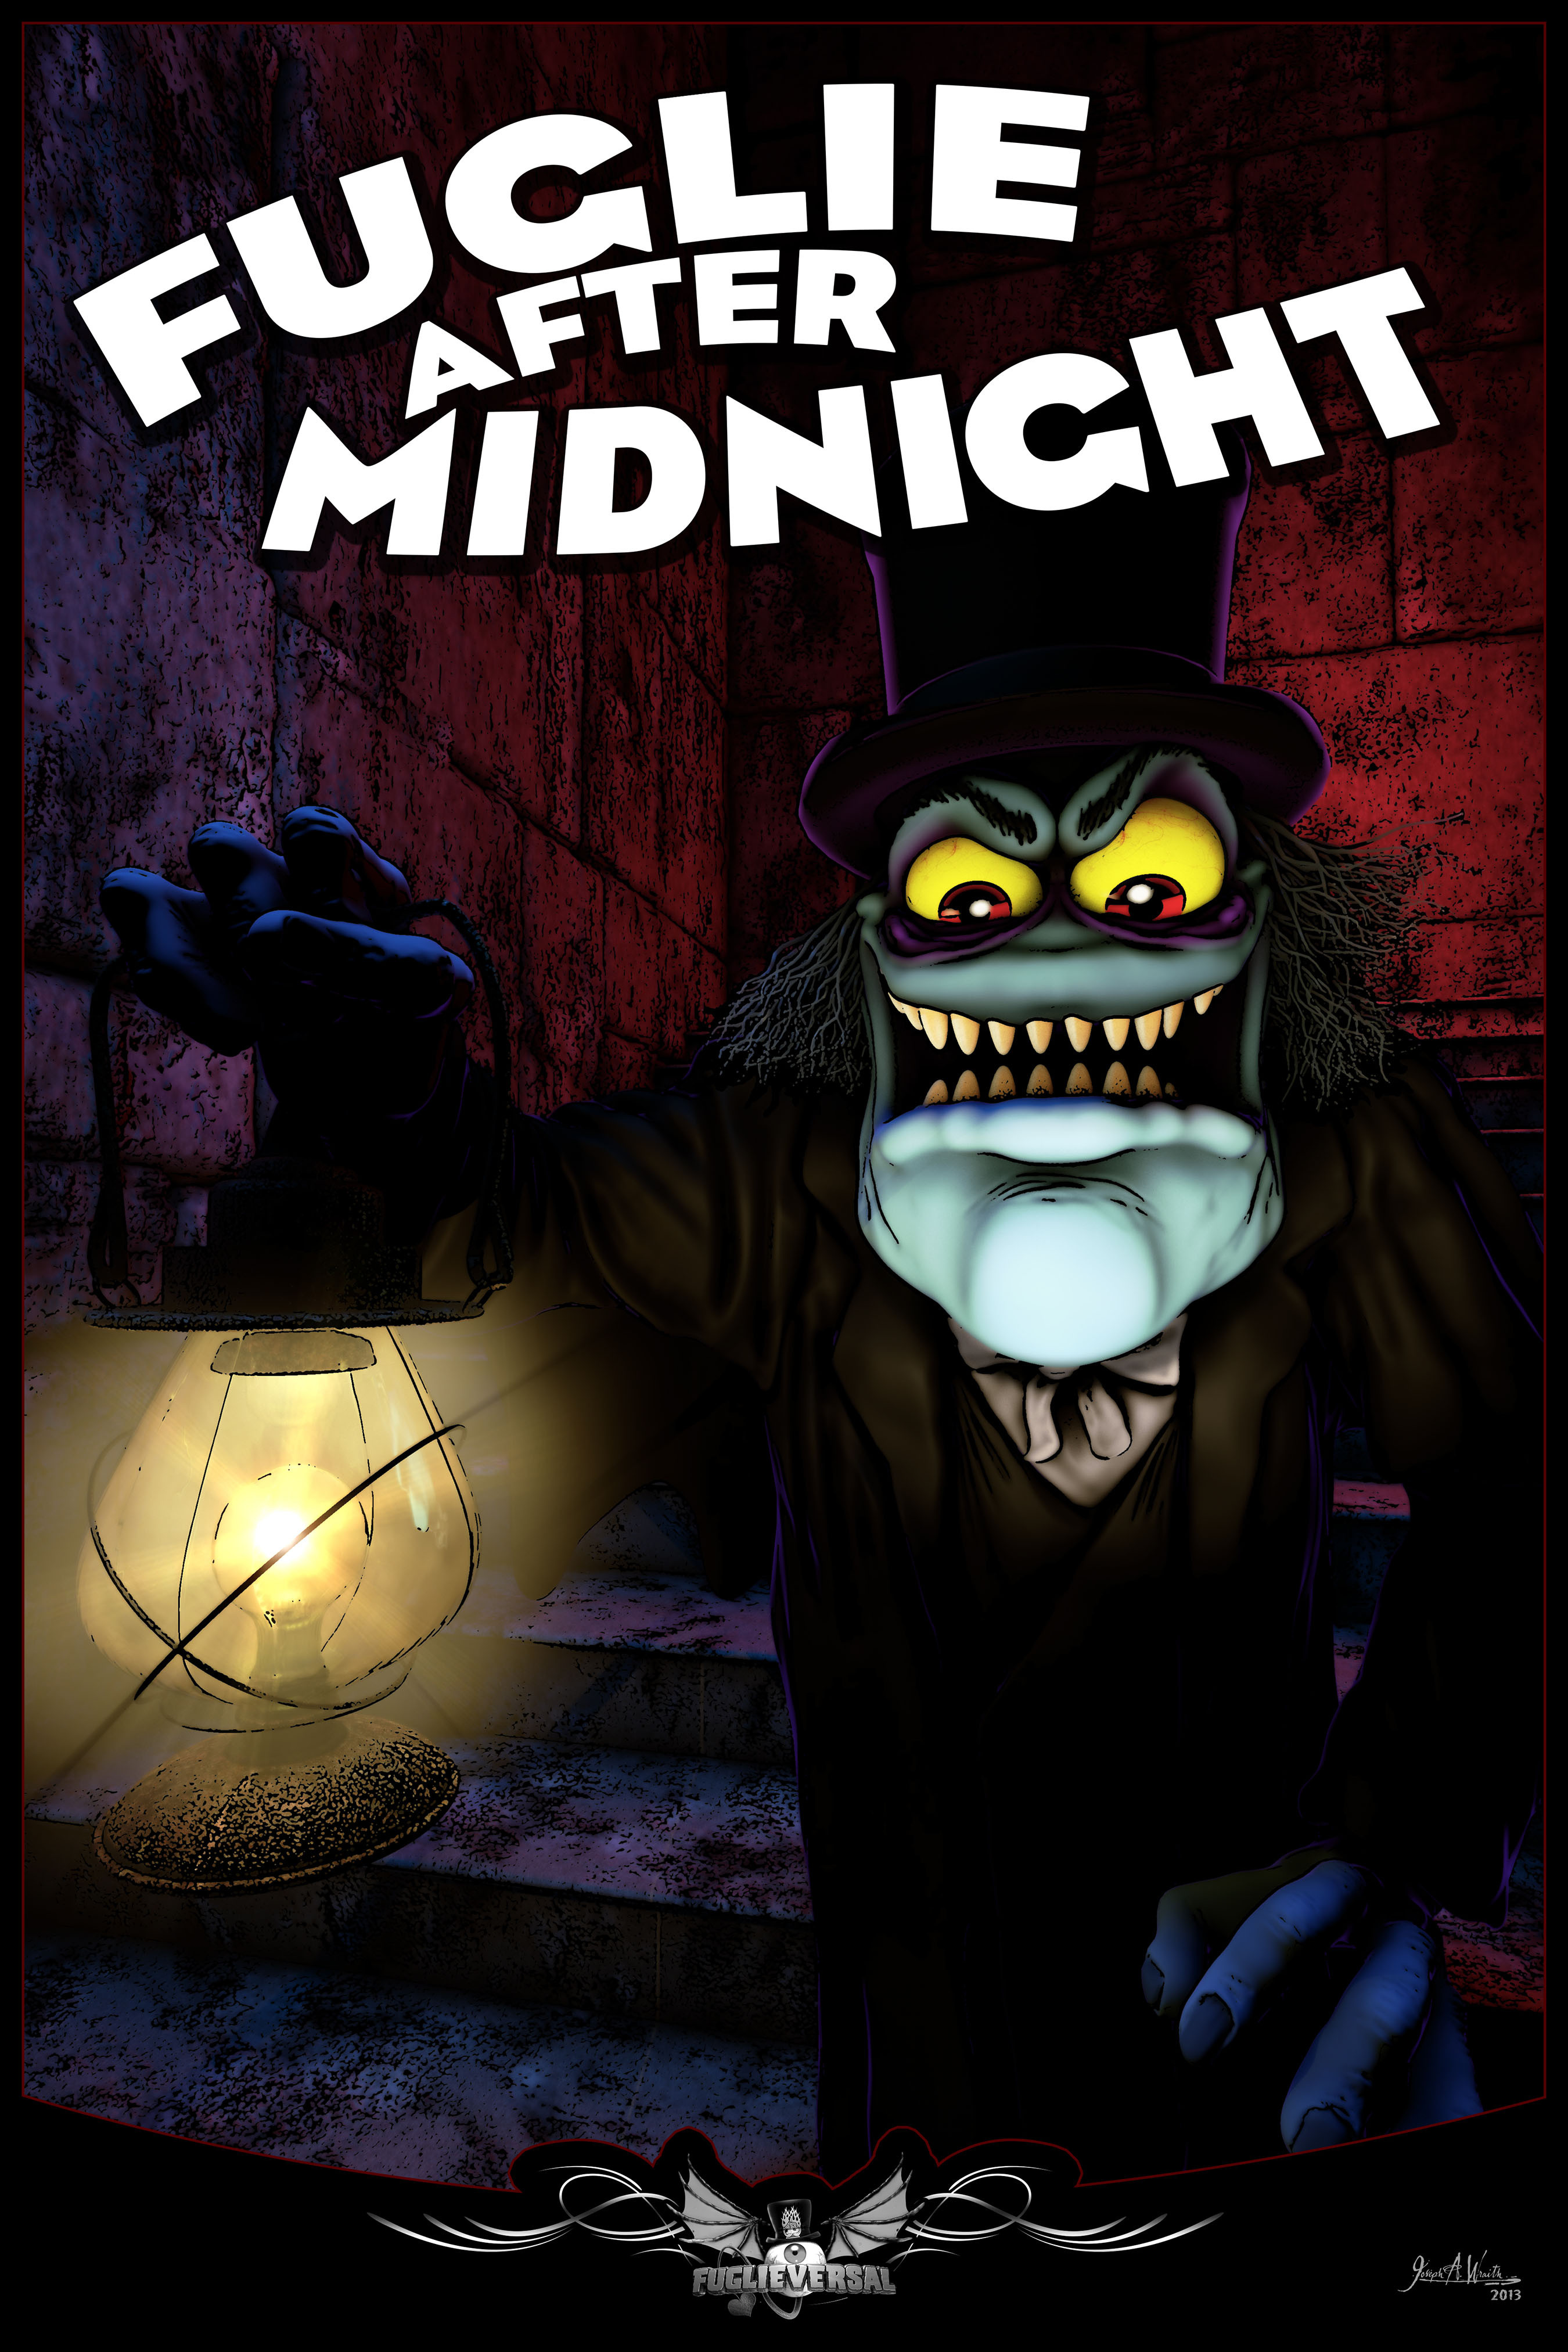 The Fuglies presents Fuglieversal Monsters: Fuglie After Midnight
©2014 Copyright, Joseph A. Wraith